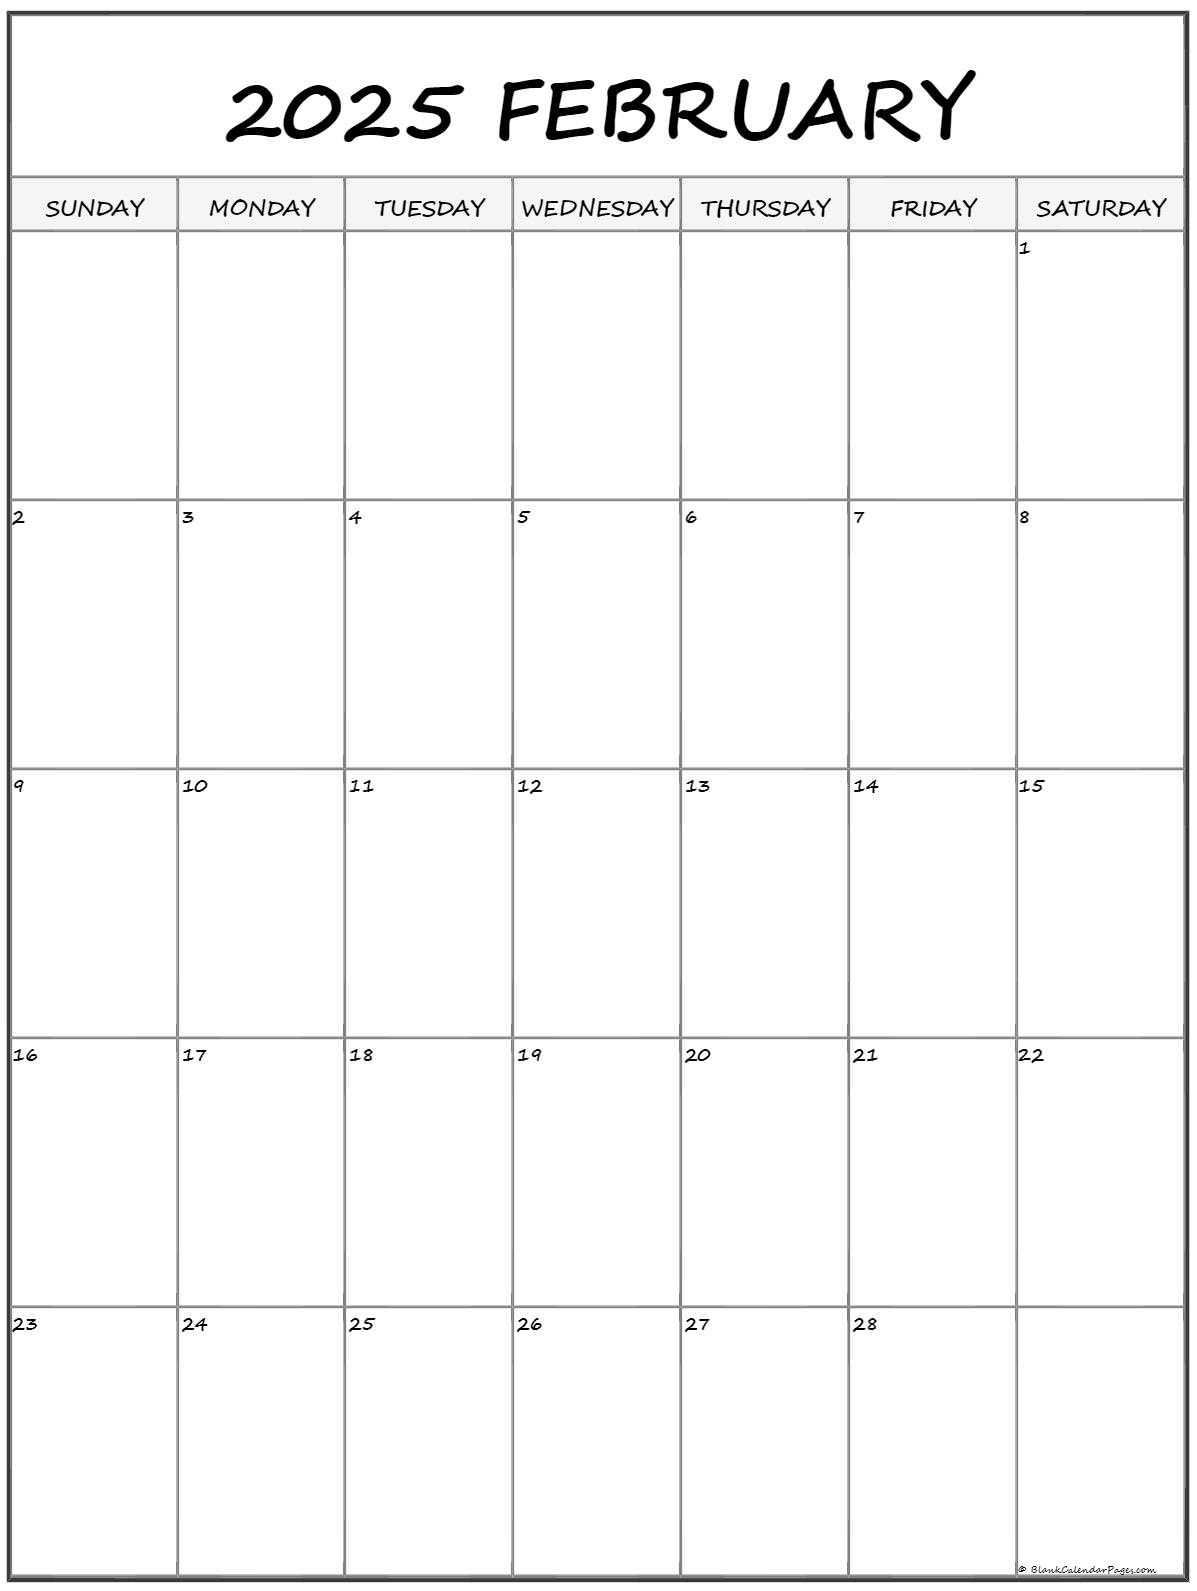 February 2025 Calendar Page 